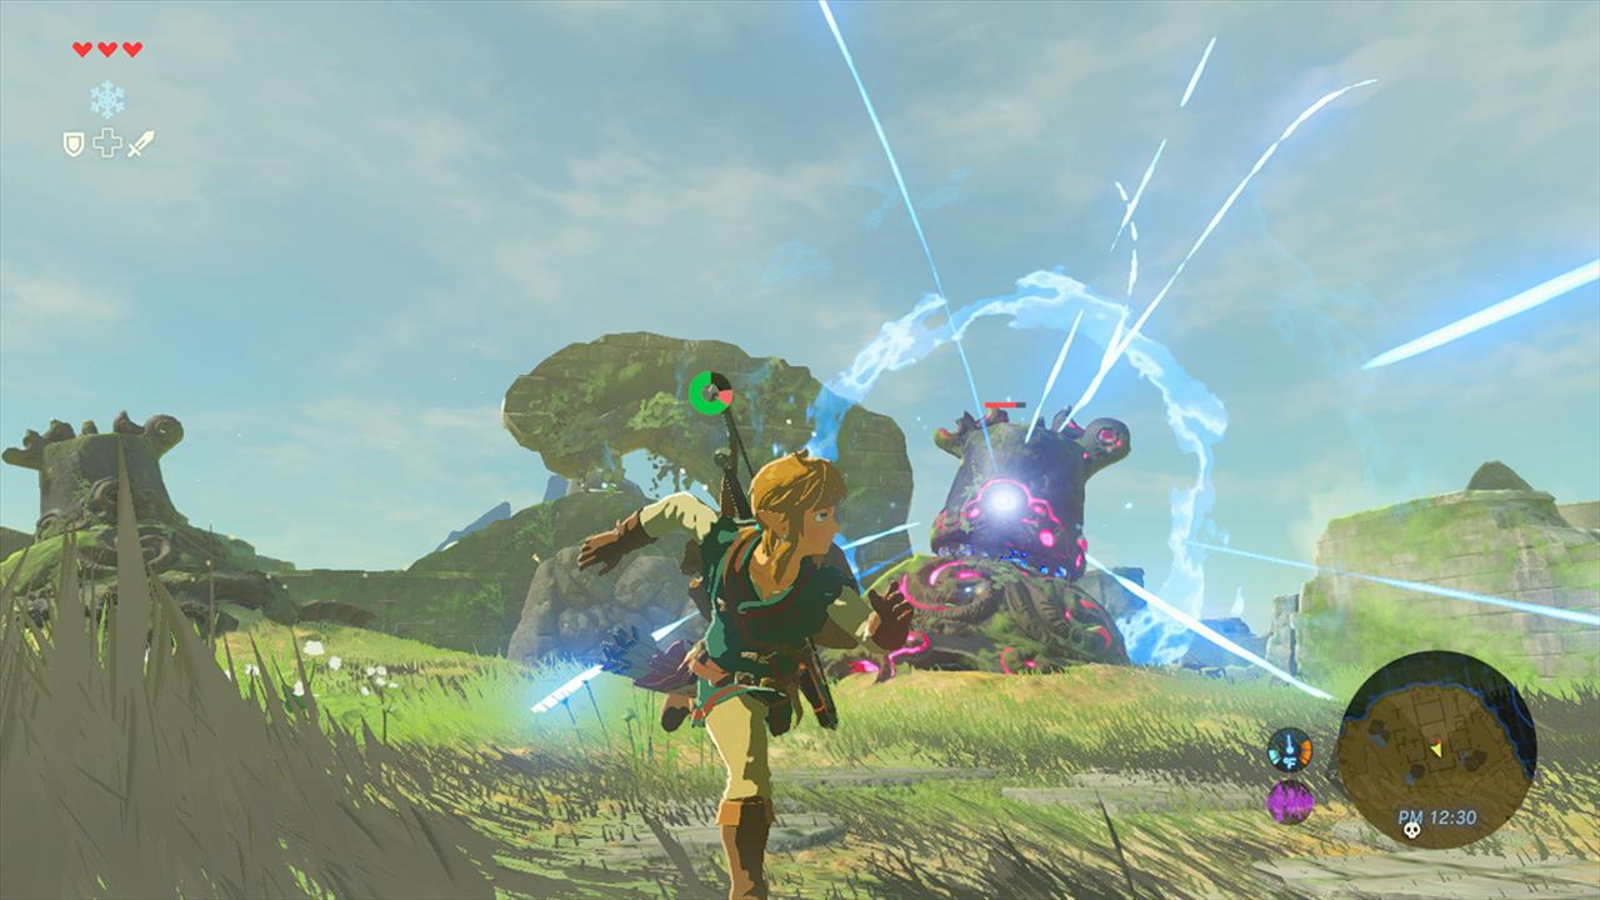 Sorry, The Nintendo Switch Doesn't Need Legend of Zelda: Ocarina